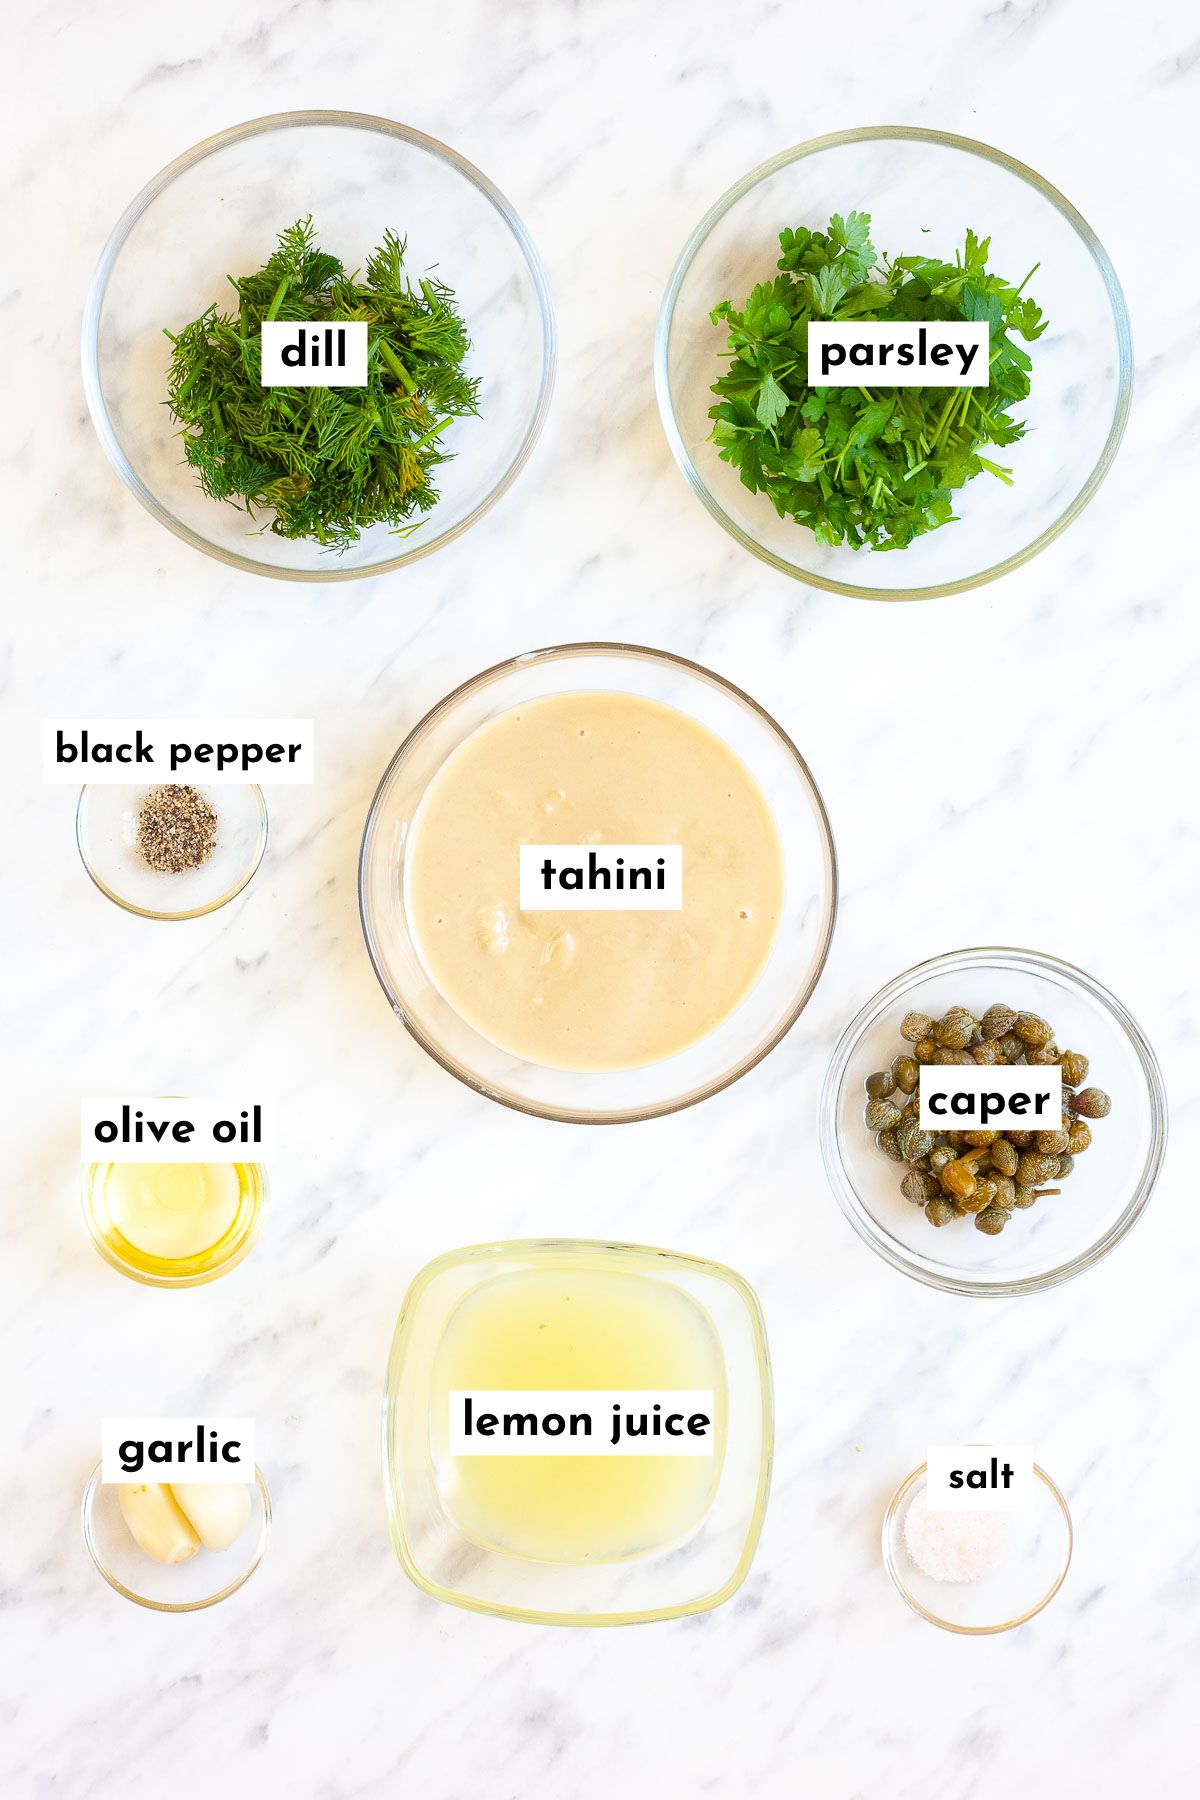 Ingredients of lemon herb tahini sauce is small glass bowls dill, parsley, tahini, lemon juice, capers, salt, pepper, olive oil and garlic powder